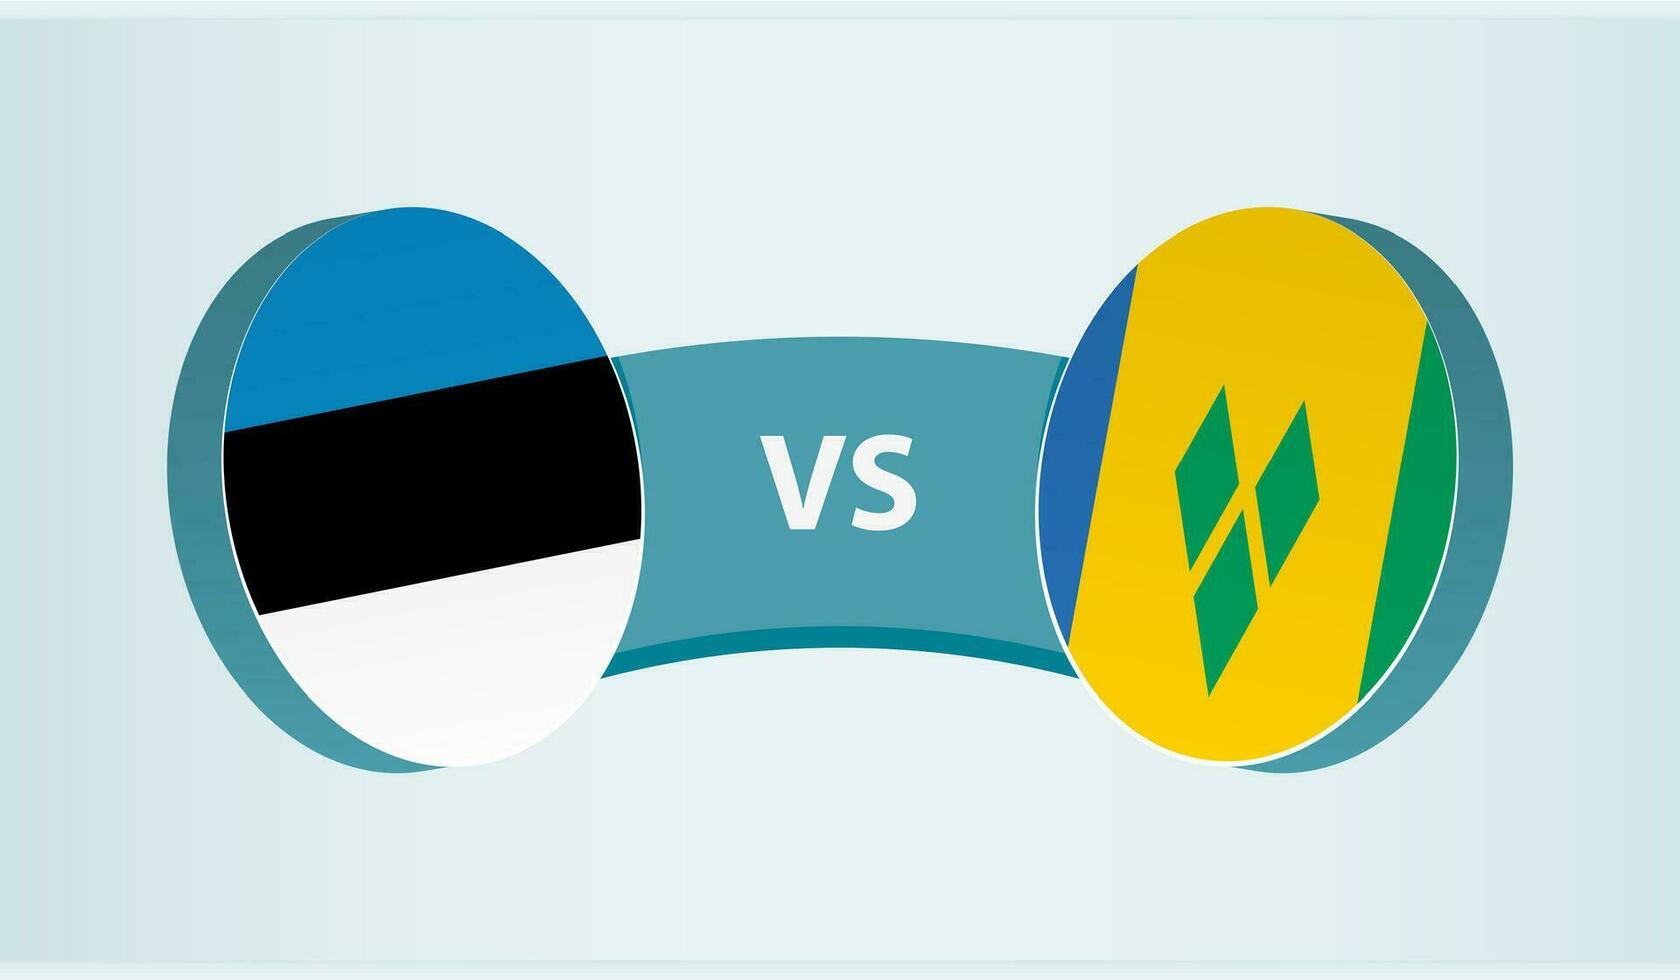 Estonia versus Saint Vincent and the Grenadines, team sports competition concept. vector